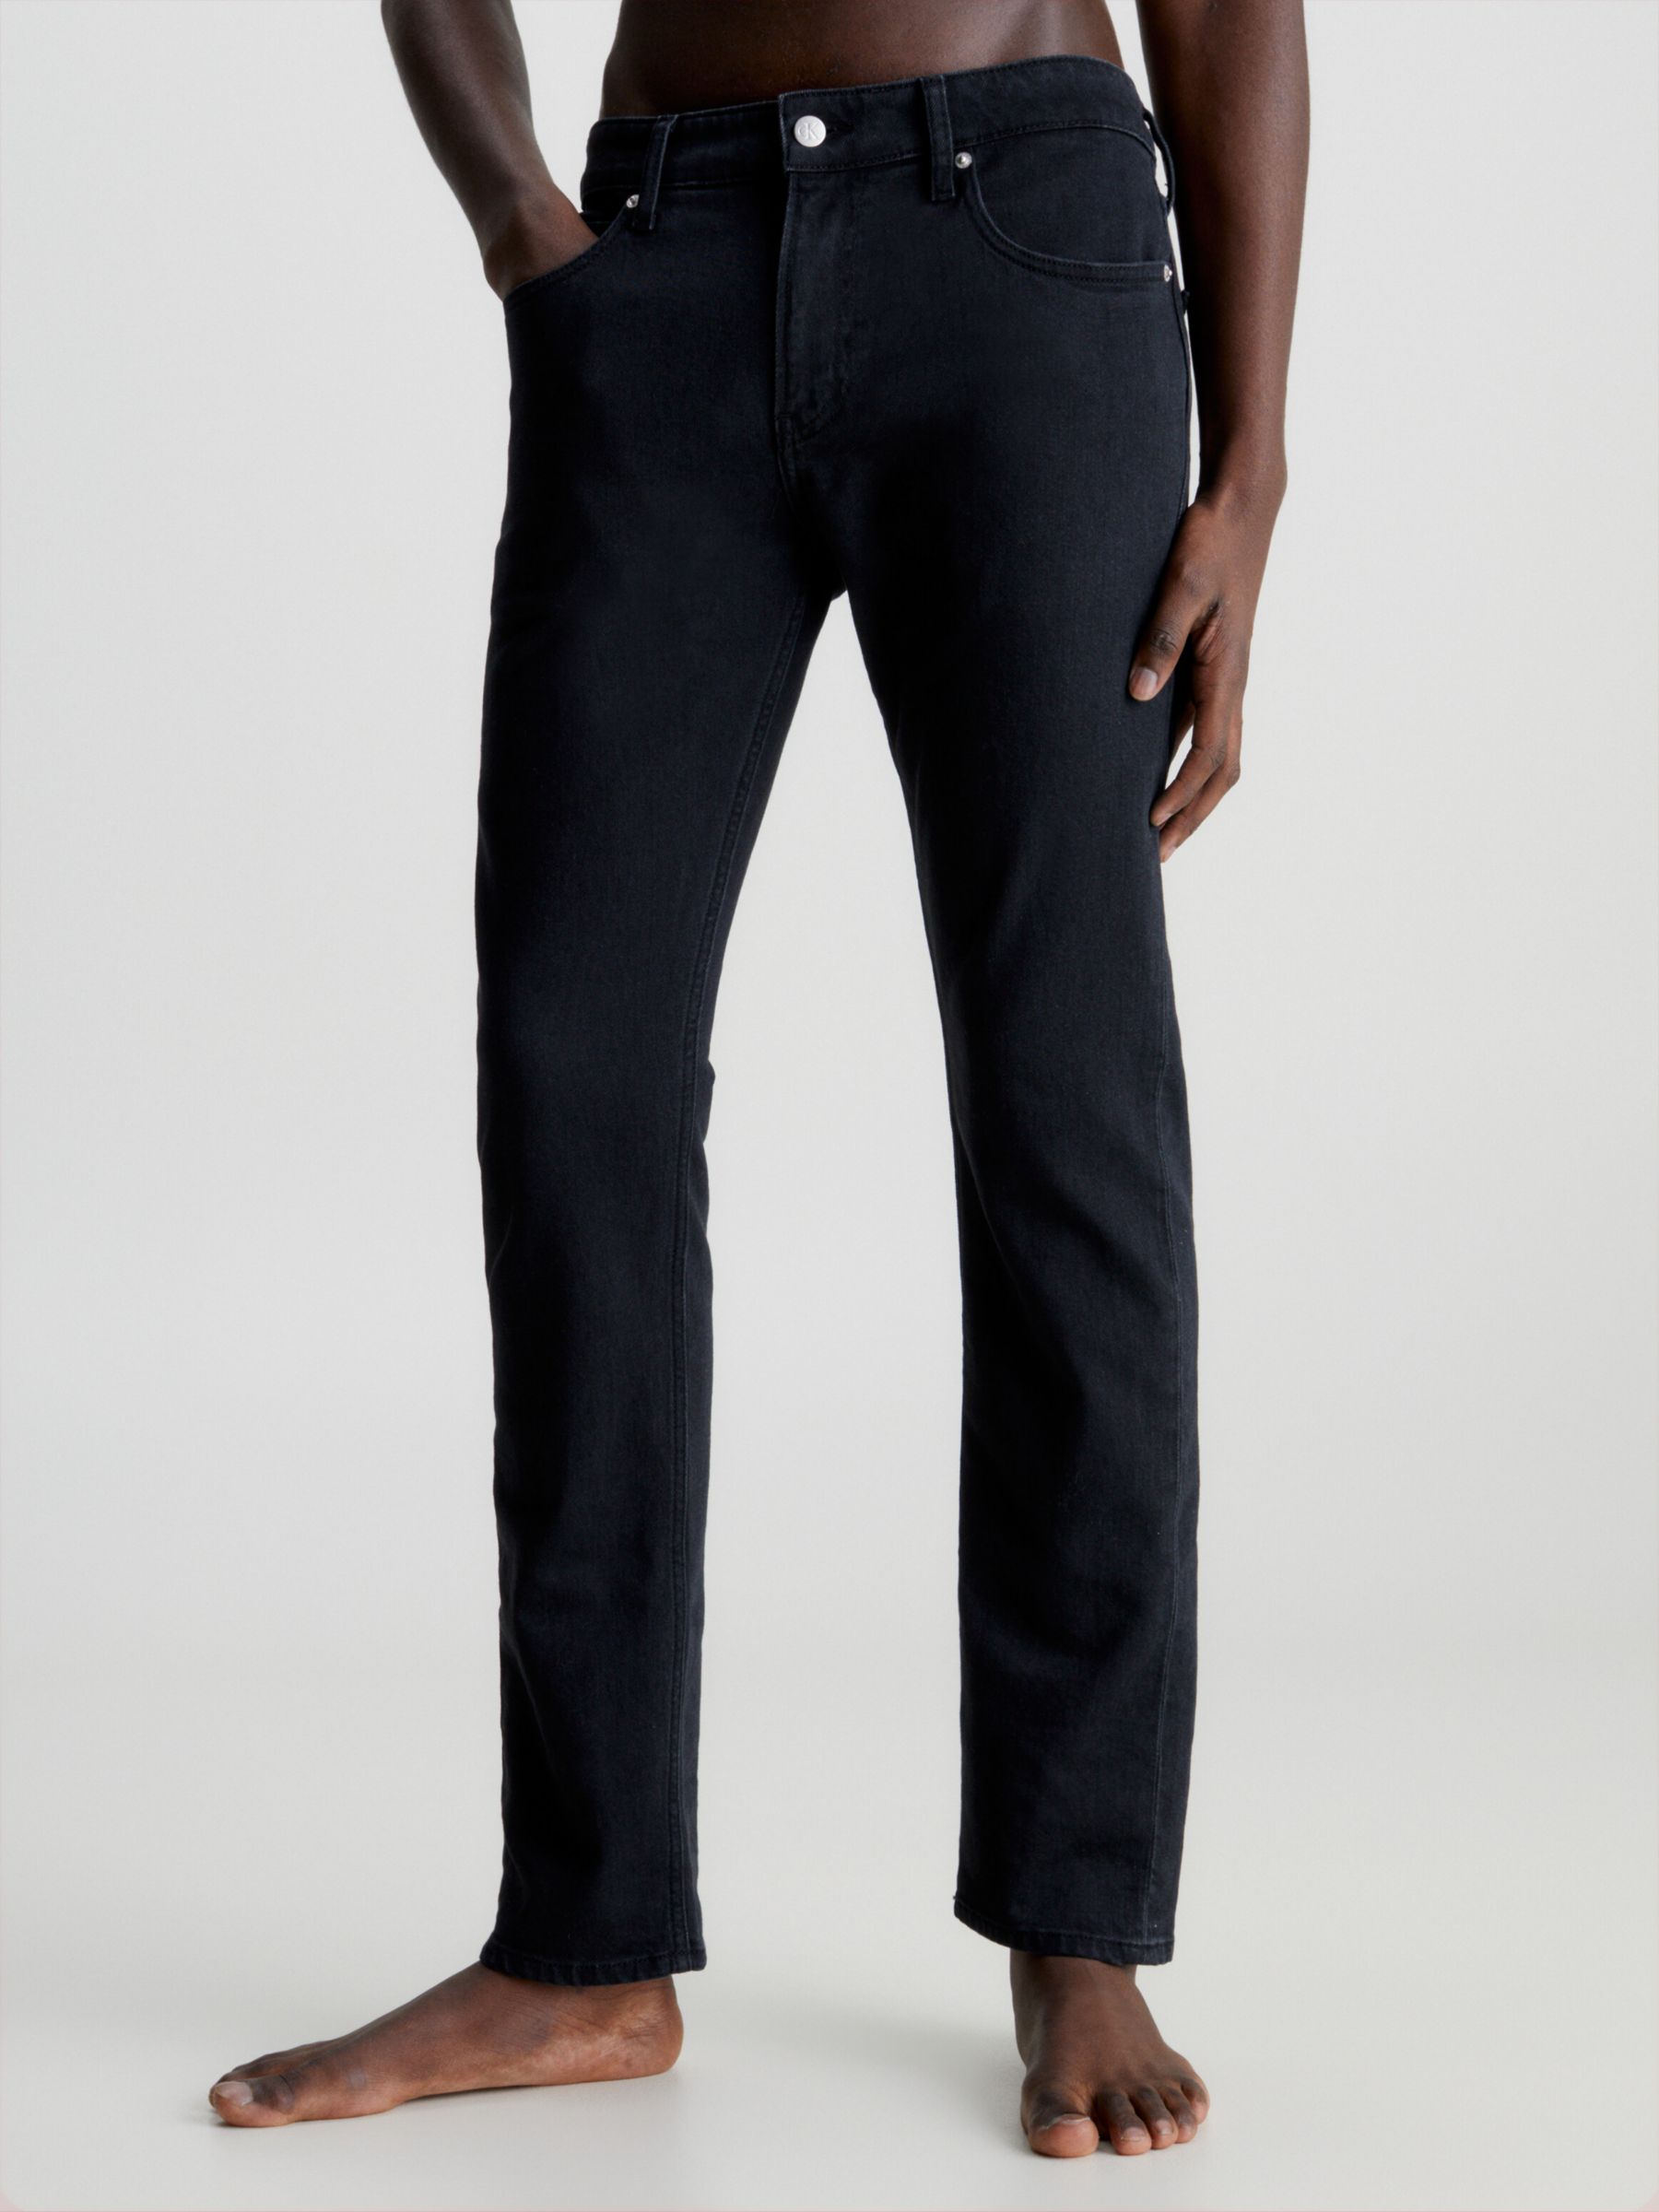 Calvin Klein Slim Fit Jeans, Denim Black, 32S